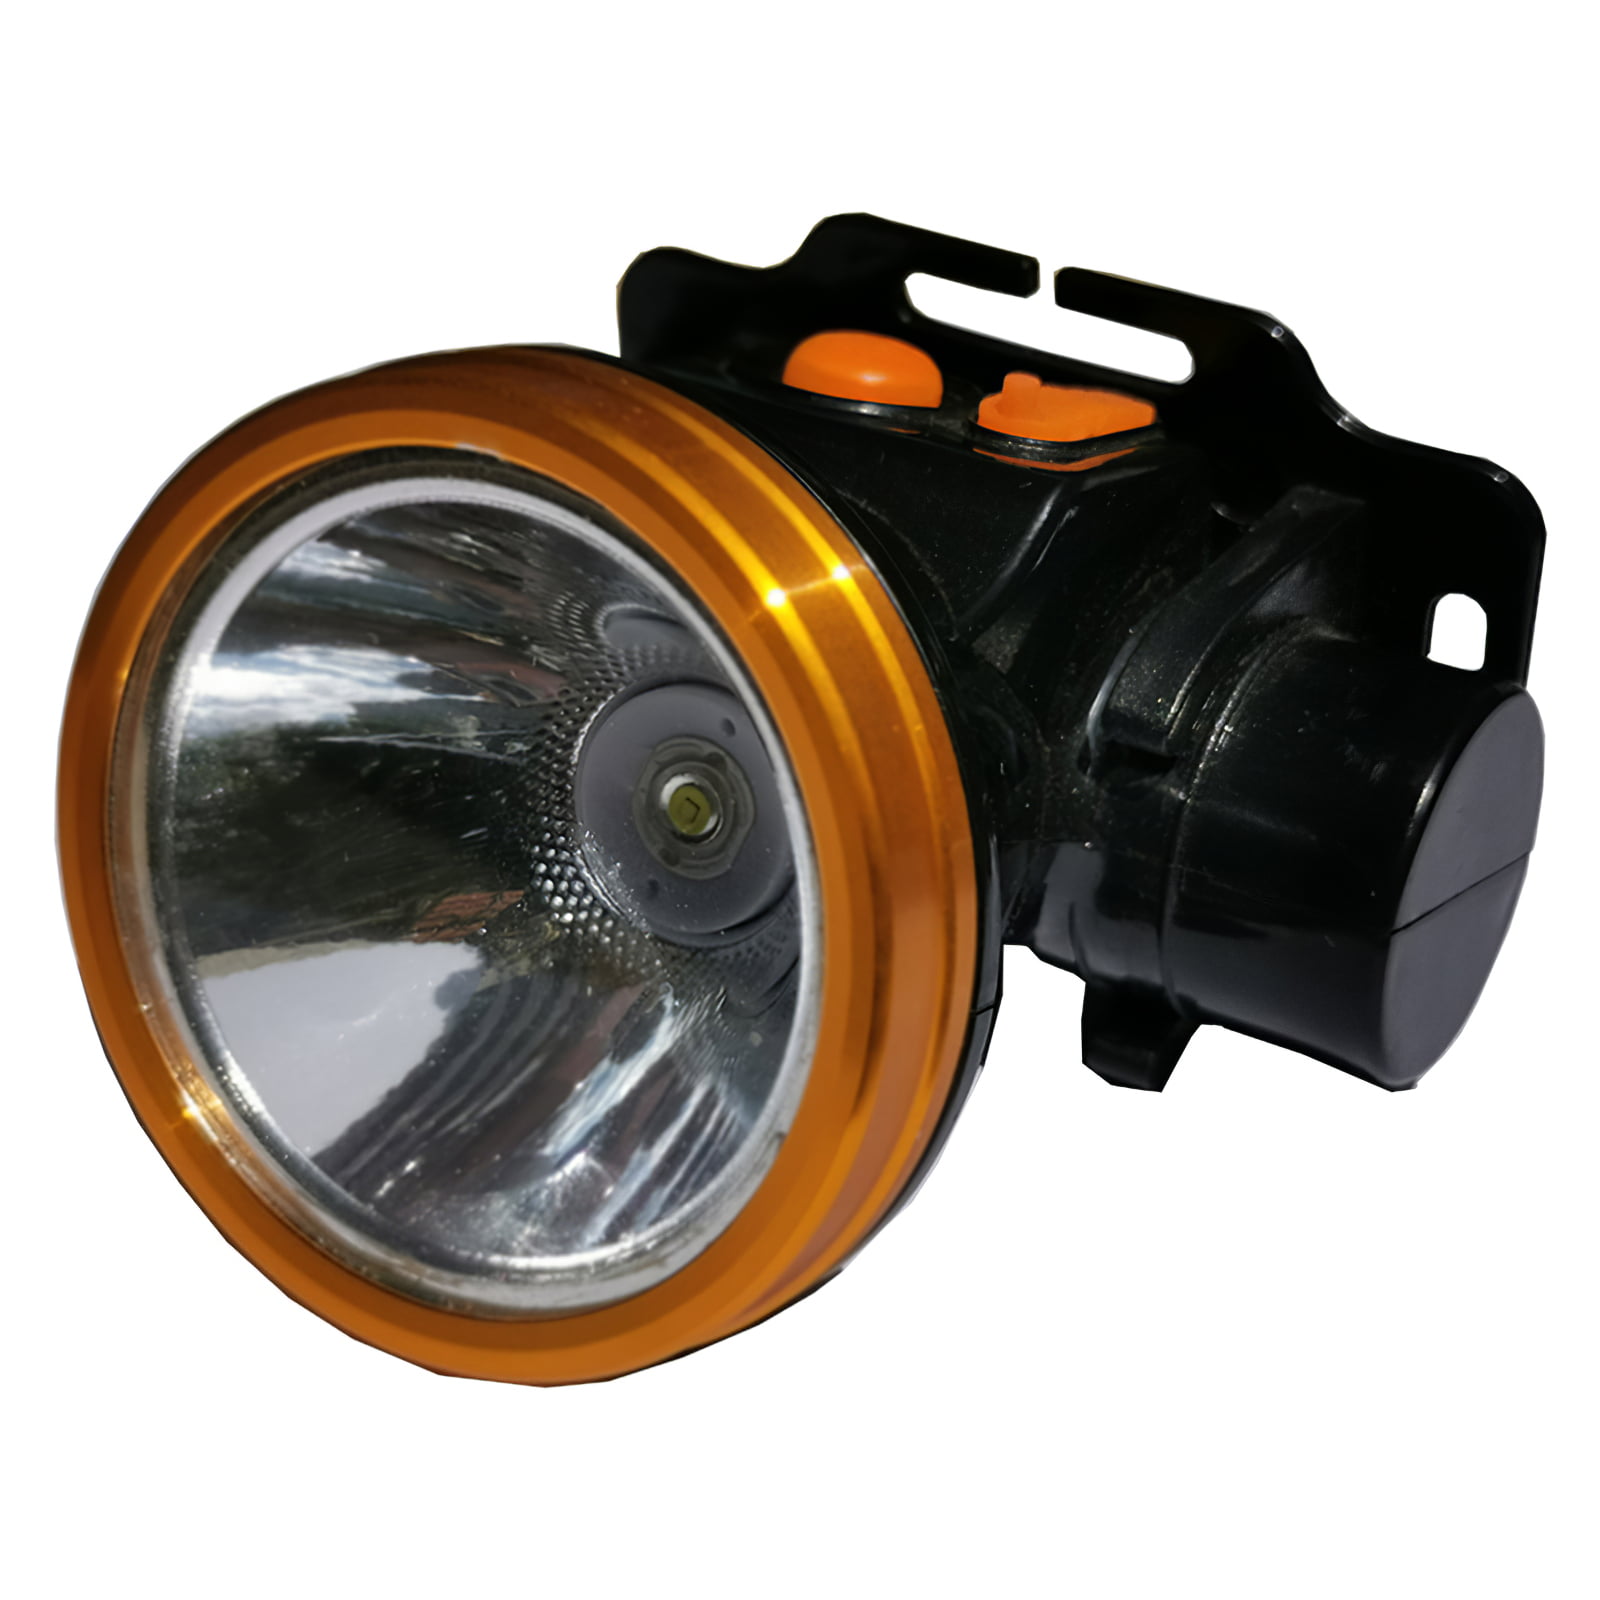 Head Lamp Waterproof LED Flashlight Super Bright Headlight Torch Light Headlamp 